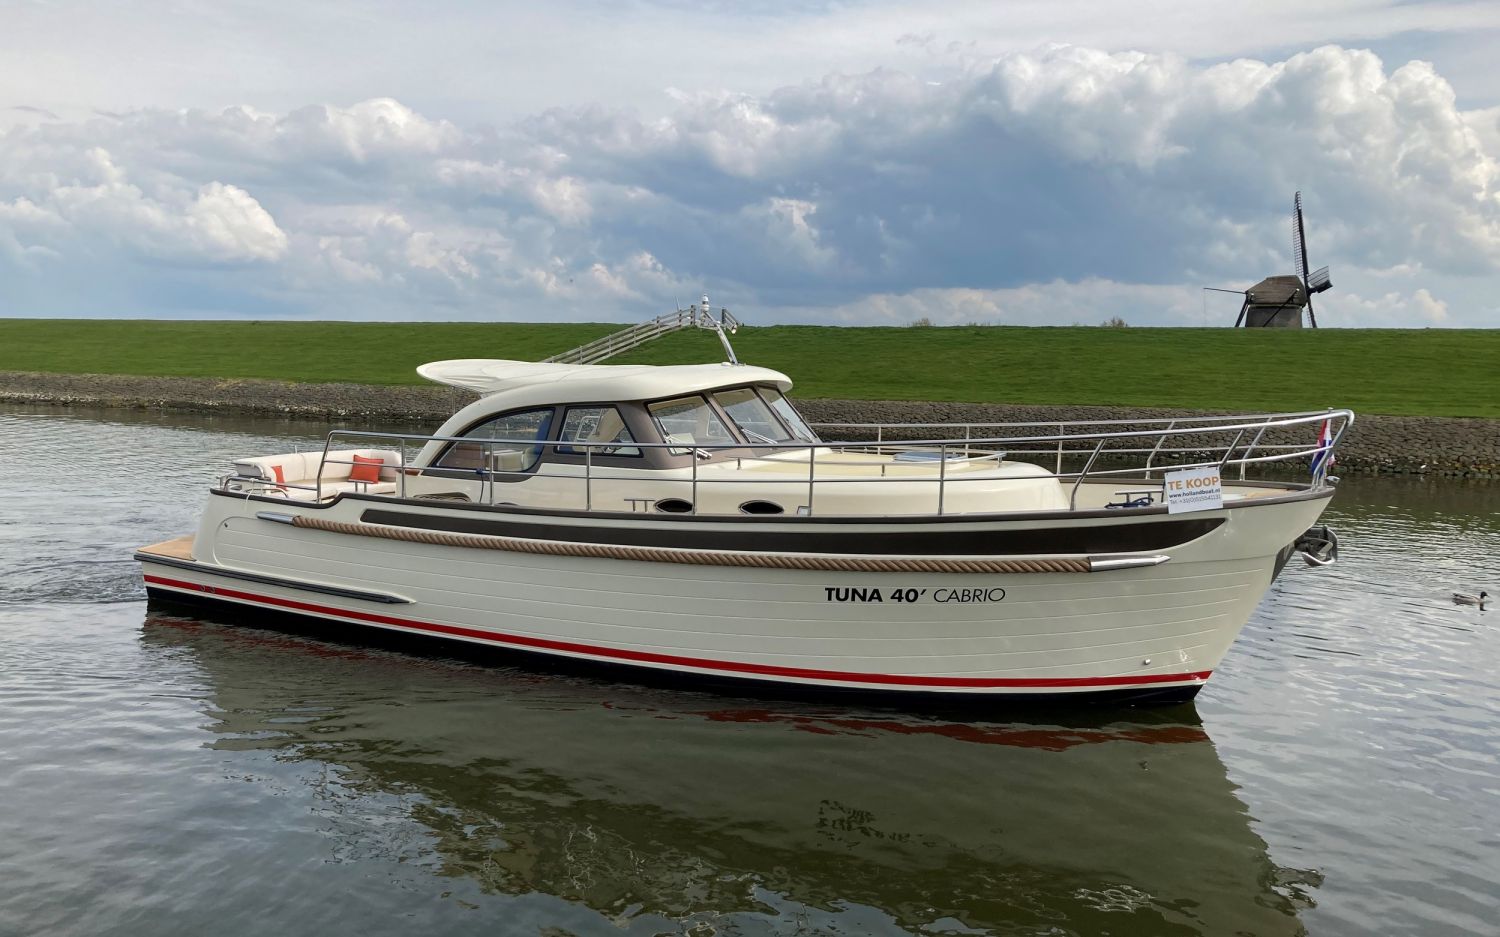 Tuna 40 Cabrio IPS, Motor Yacht for sale by HollandBoat International Yachtbrokers